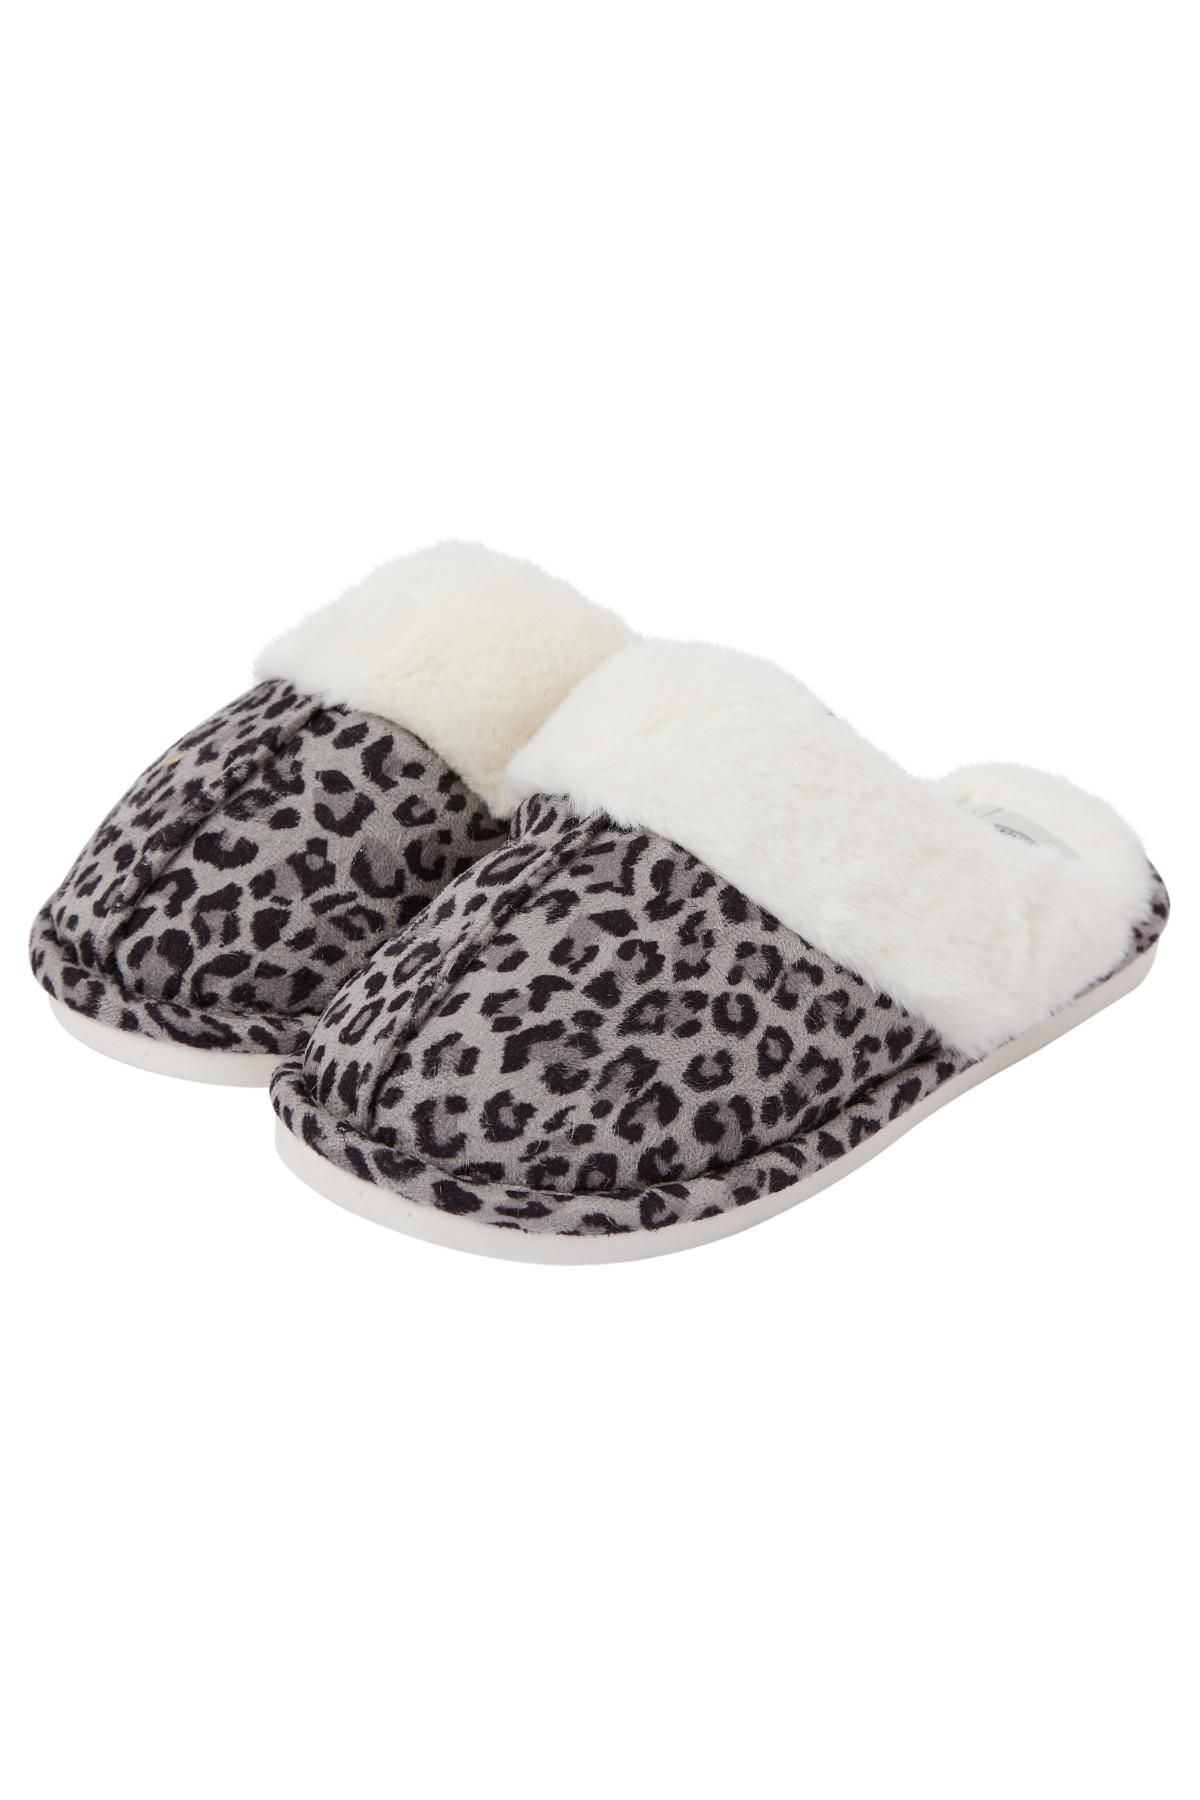 Tokyo Laundry Womens Leopard Slipper Grey